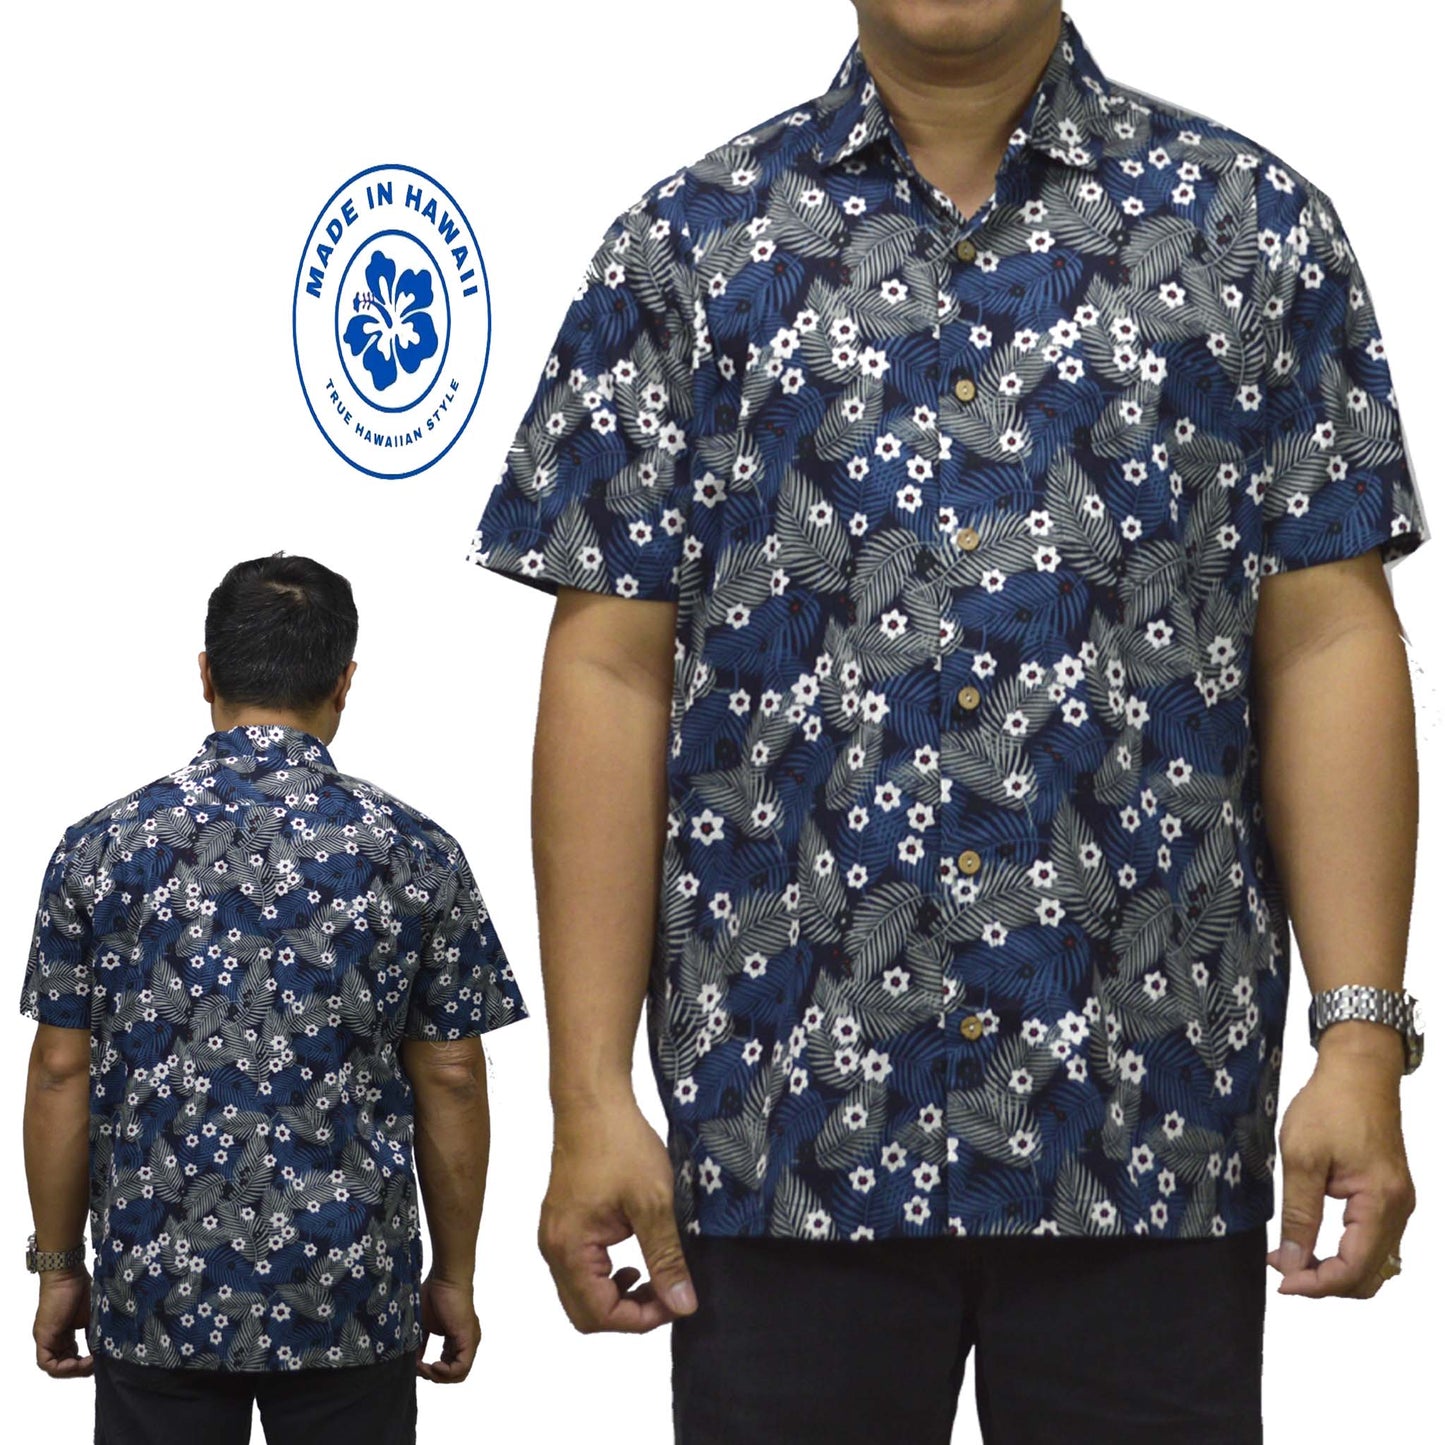 Cotton Hawaiian Performance Shirt with Hibiscus Print Made in Hawaii